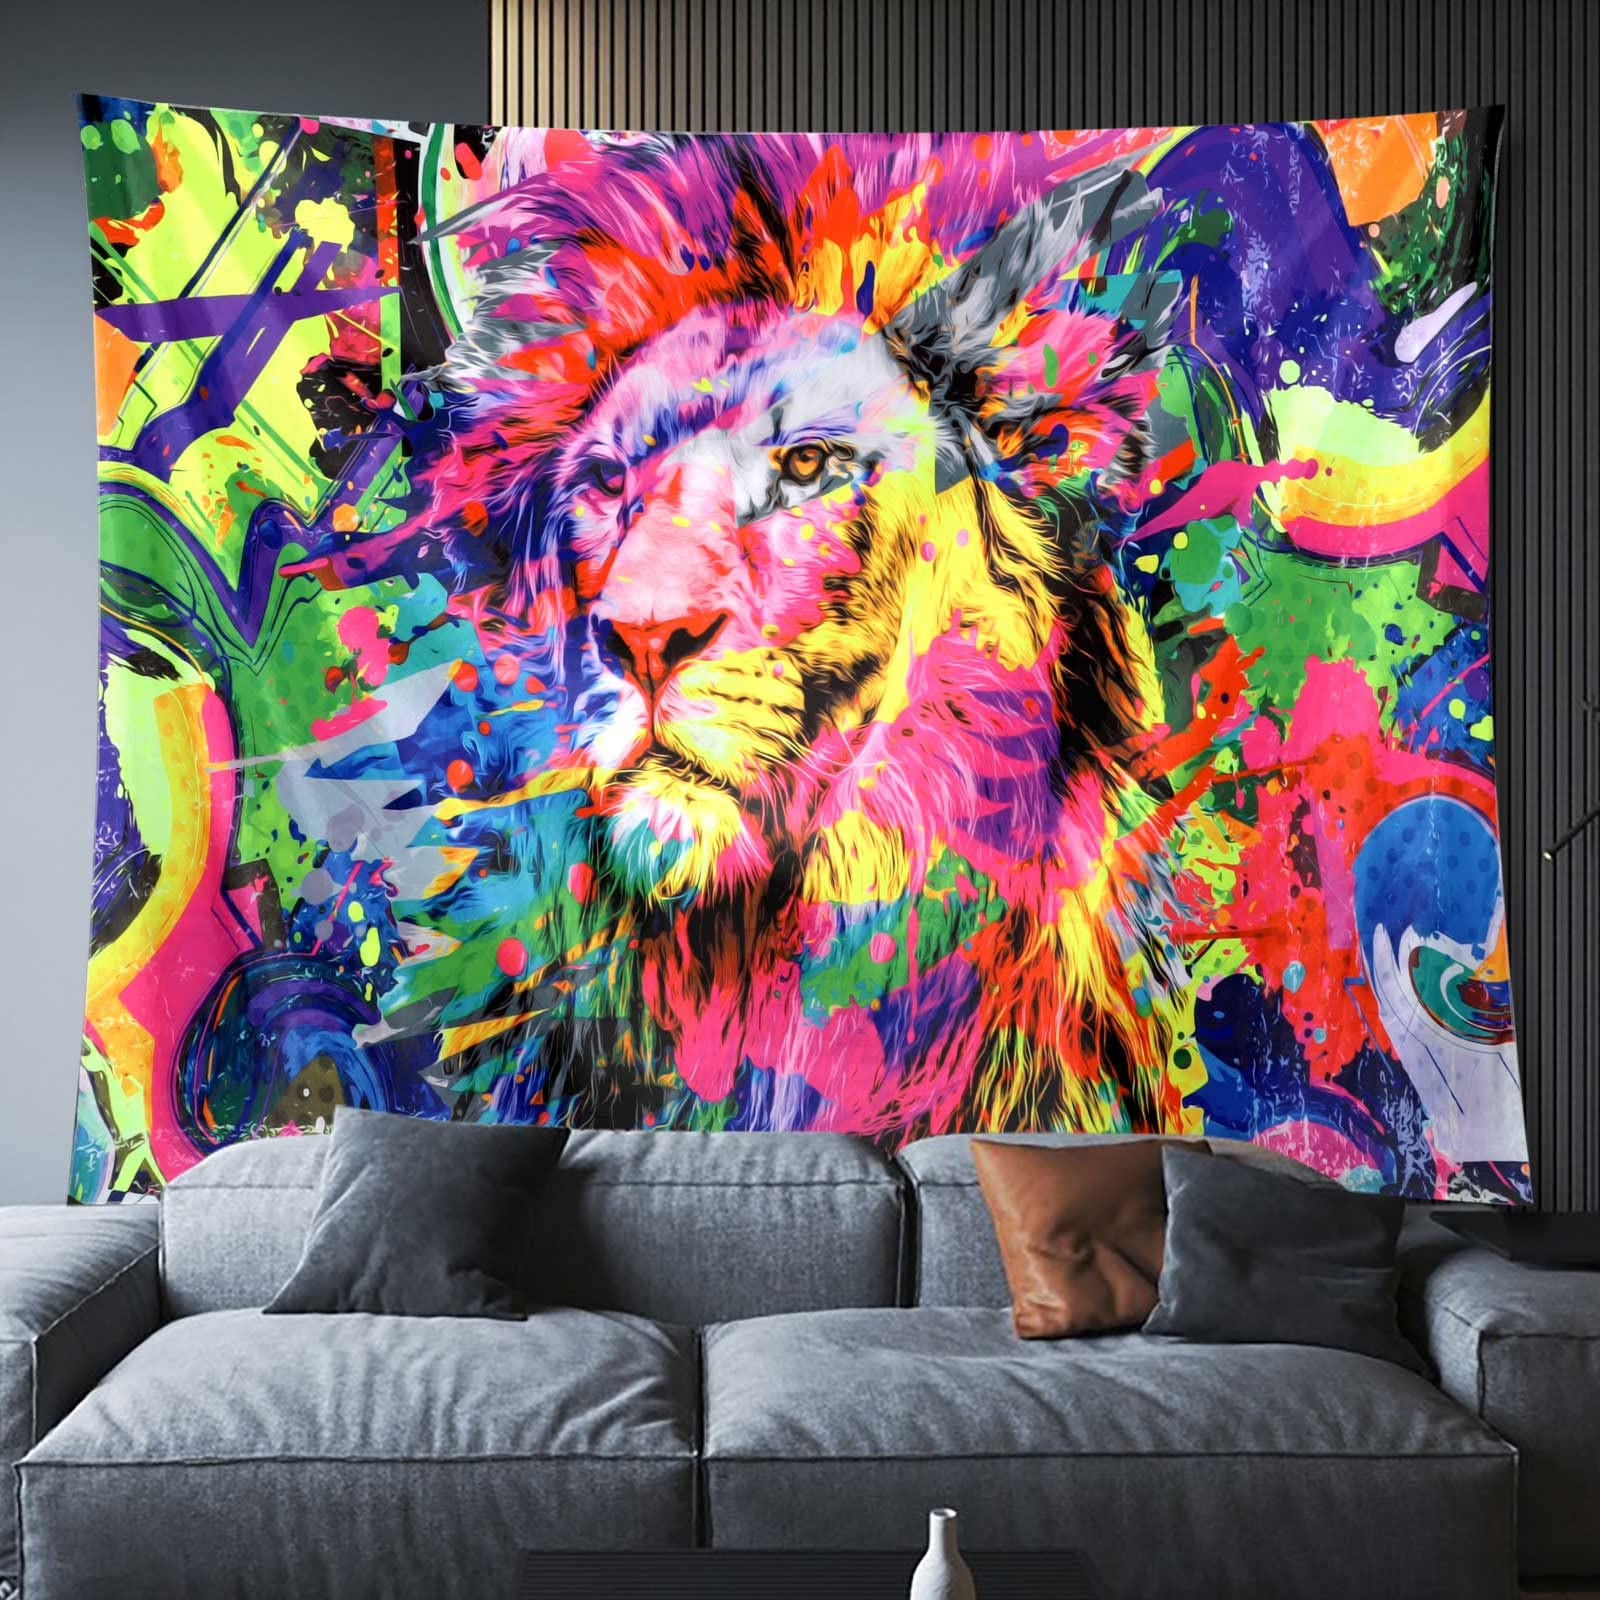 Lofaris UV Reactive Blacklight Lion King Tapestries for Room